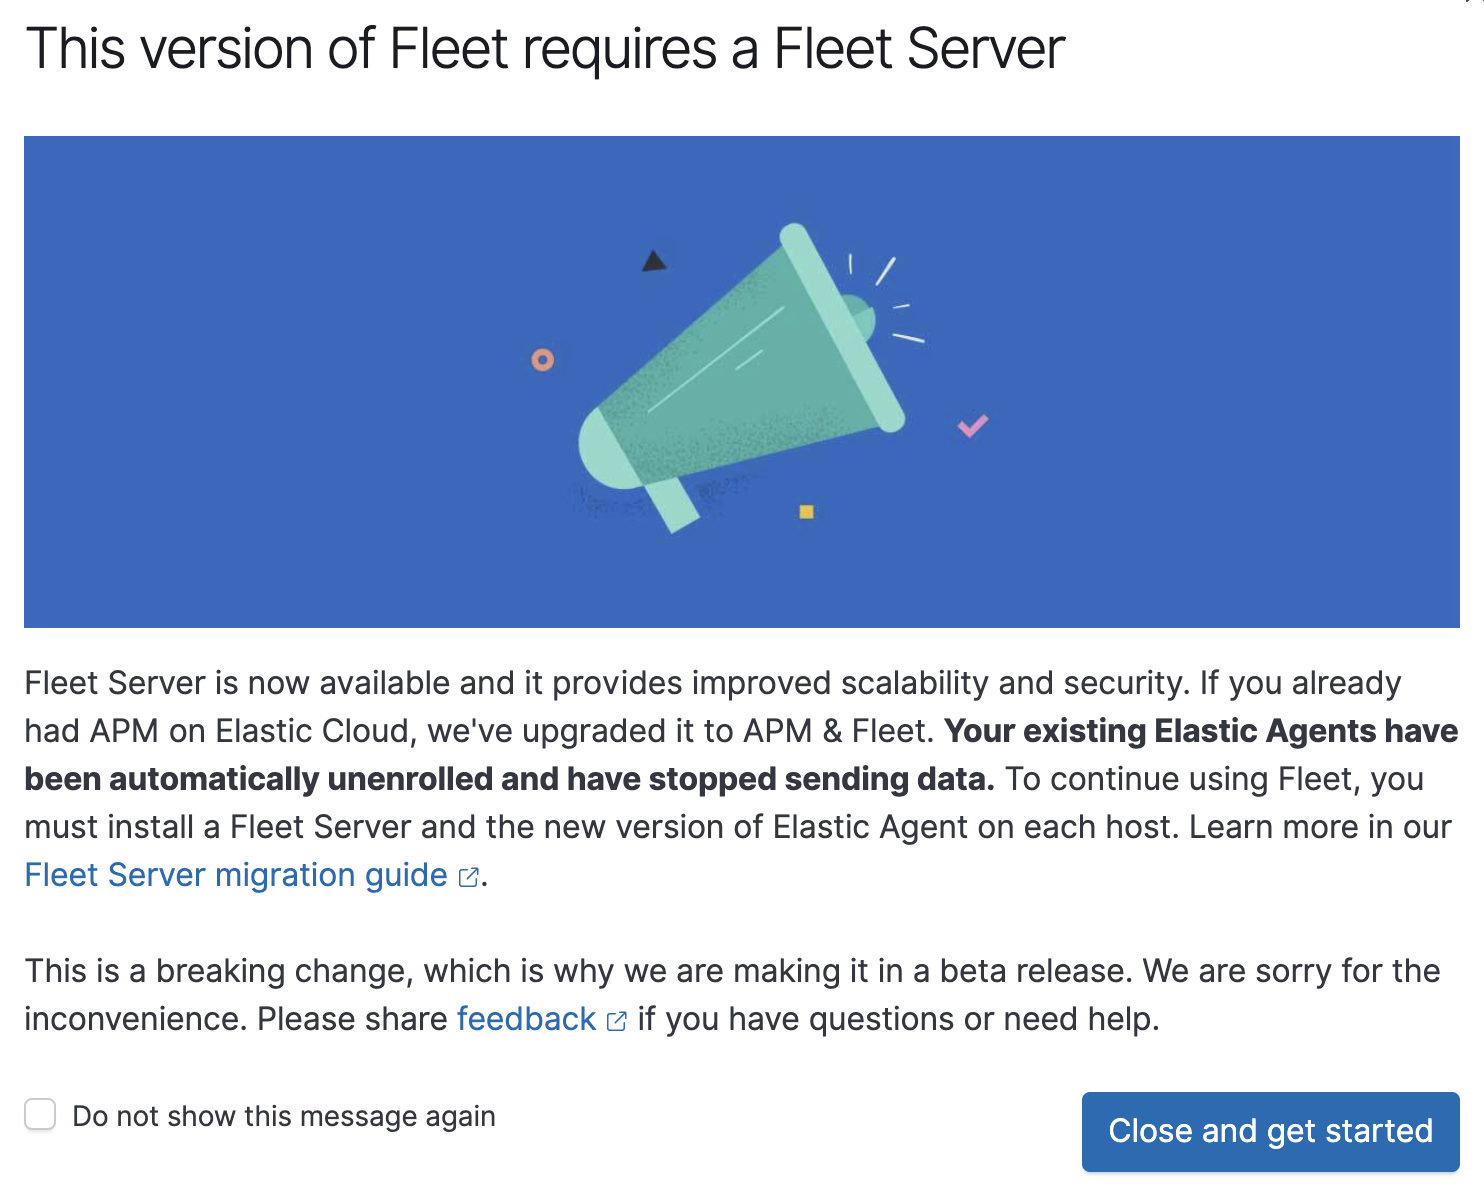 Add Fleet Server prompt